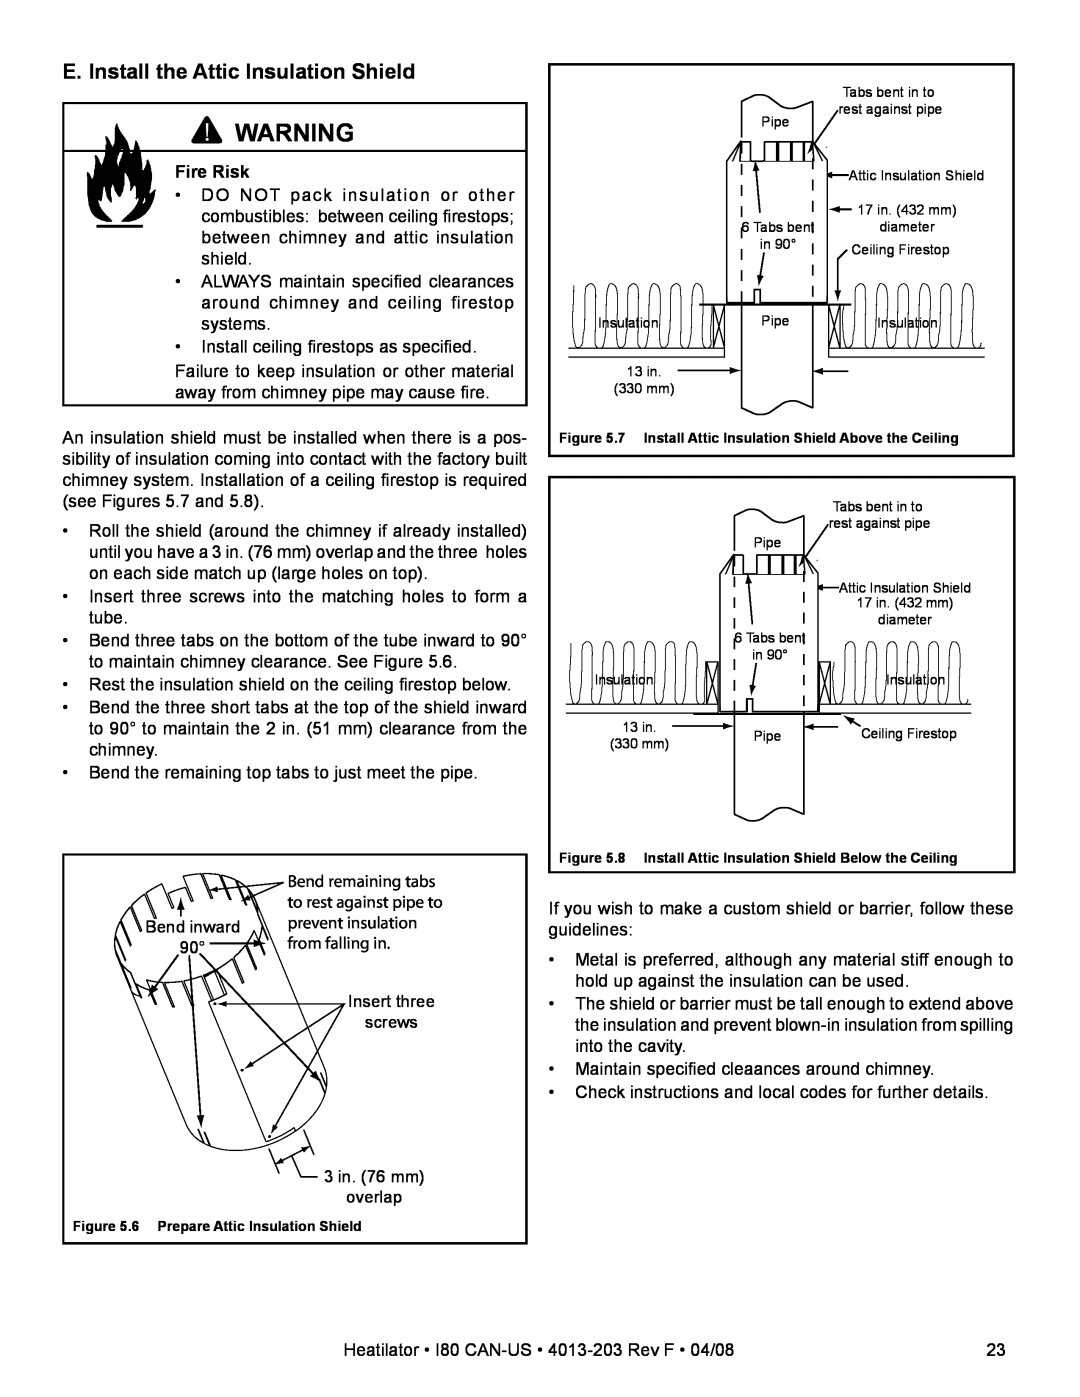 Heatiator I80 owner manual E. Install the Attic Insulation Shield, Fire Risk 